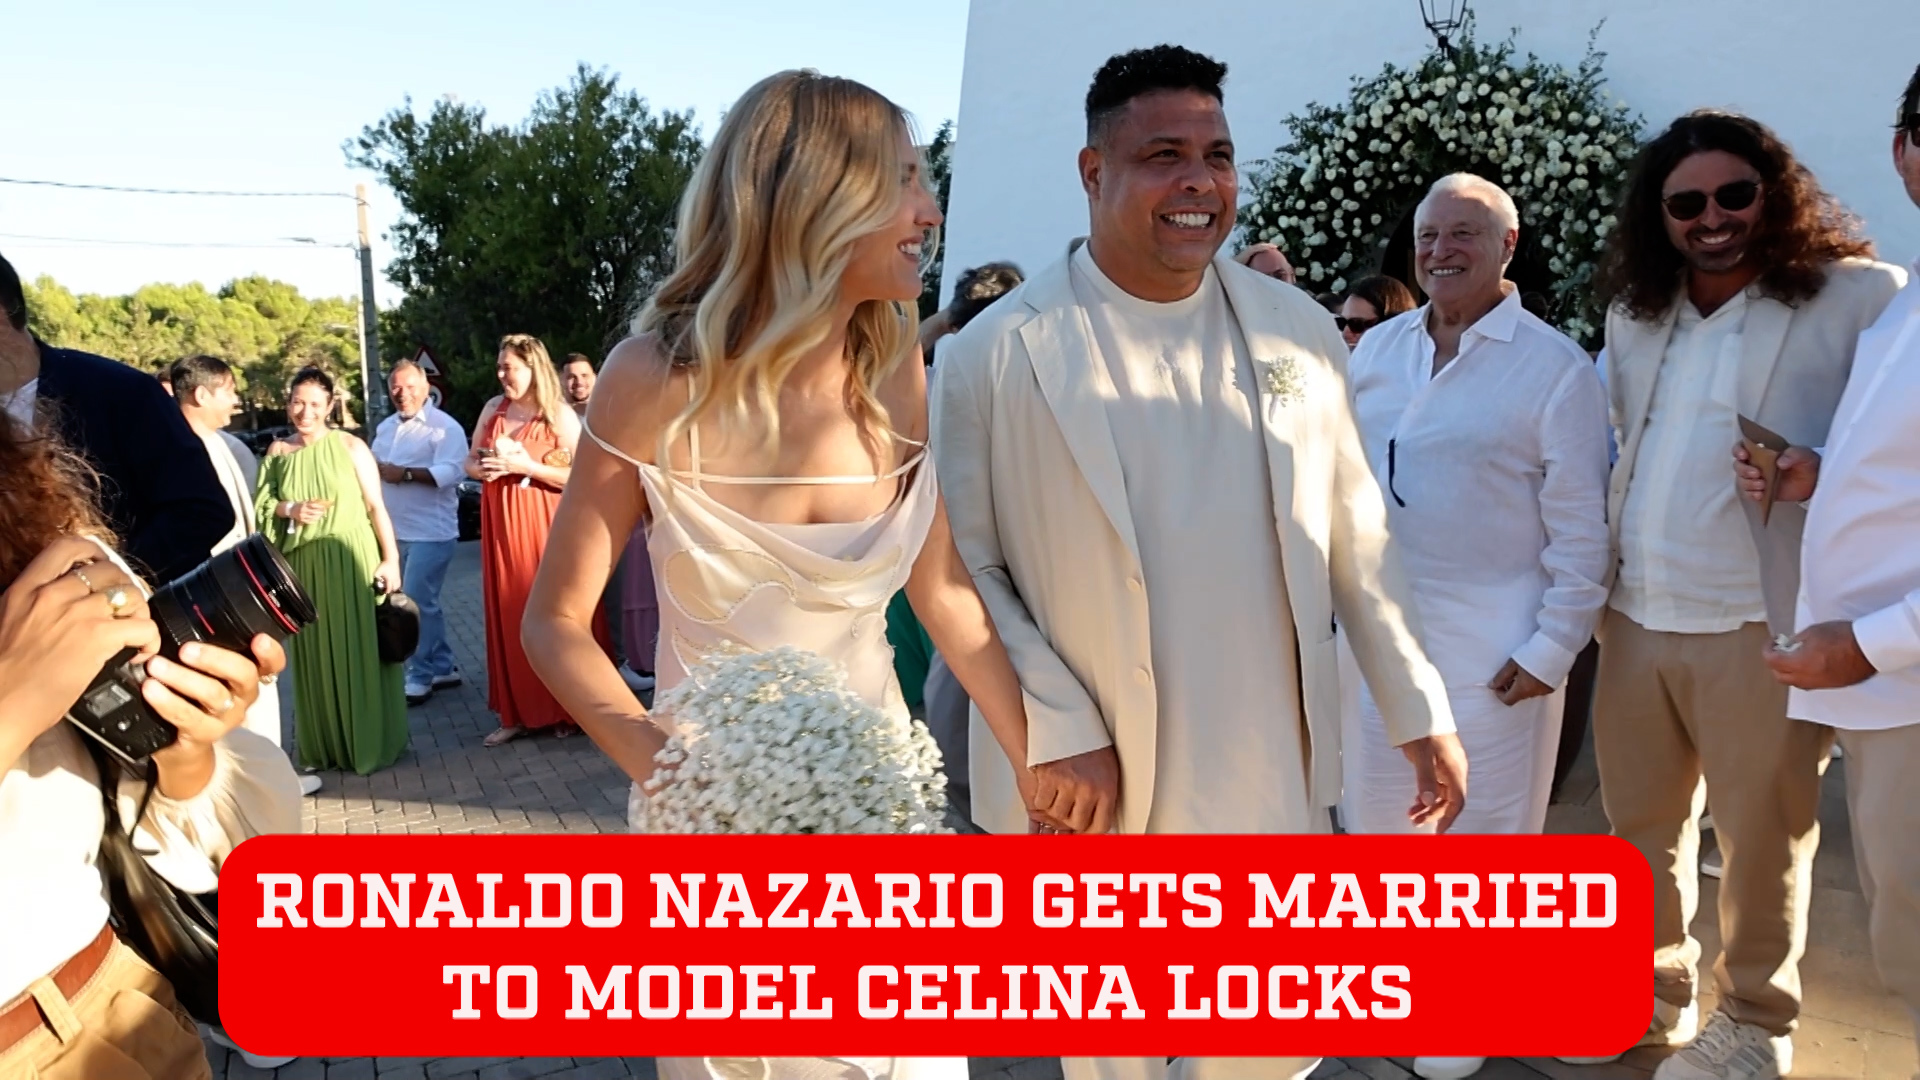 Inside soccer legend Ronaldo Nazario's Ibiza wedding with stunning model Celina Locks